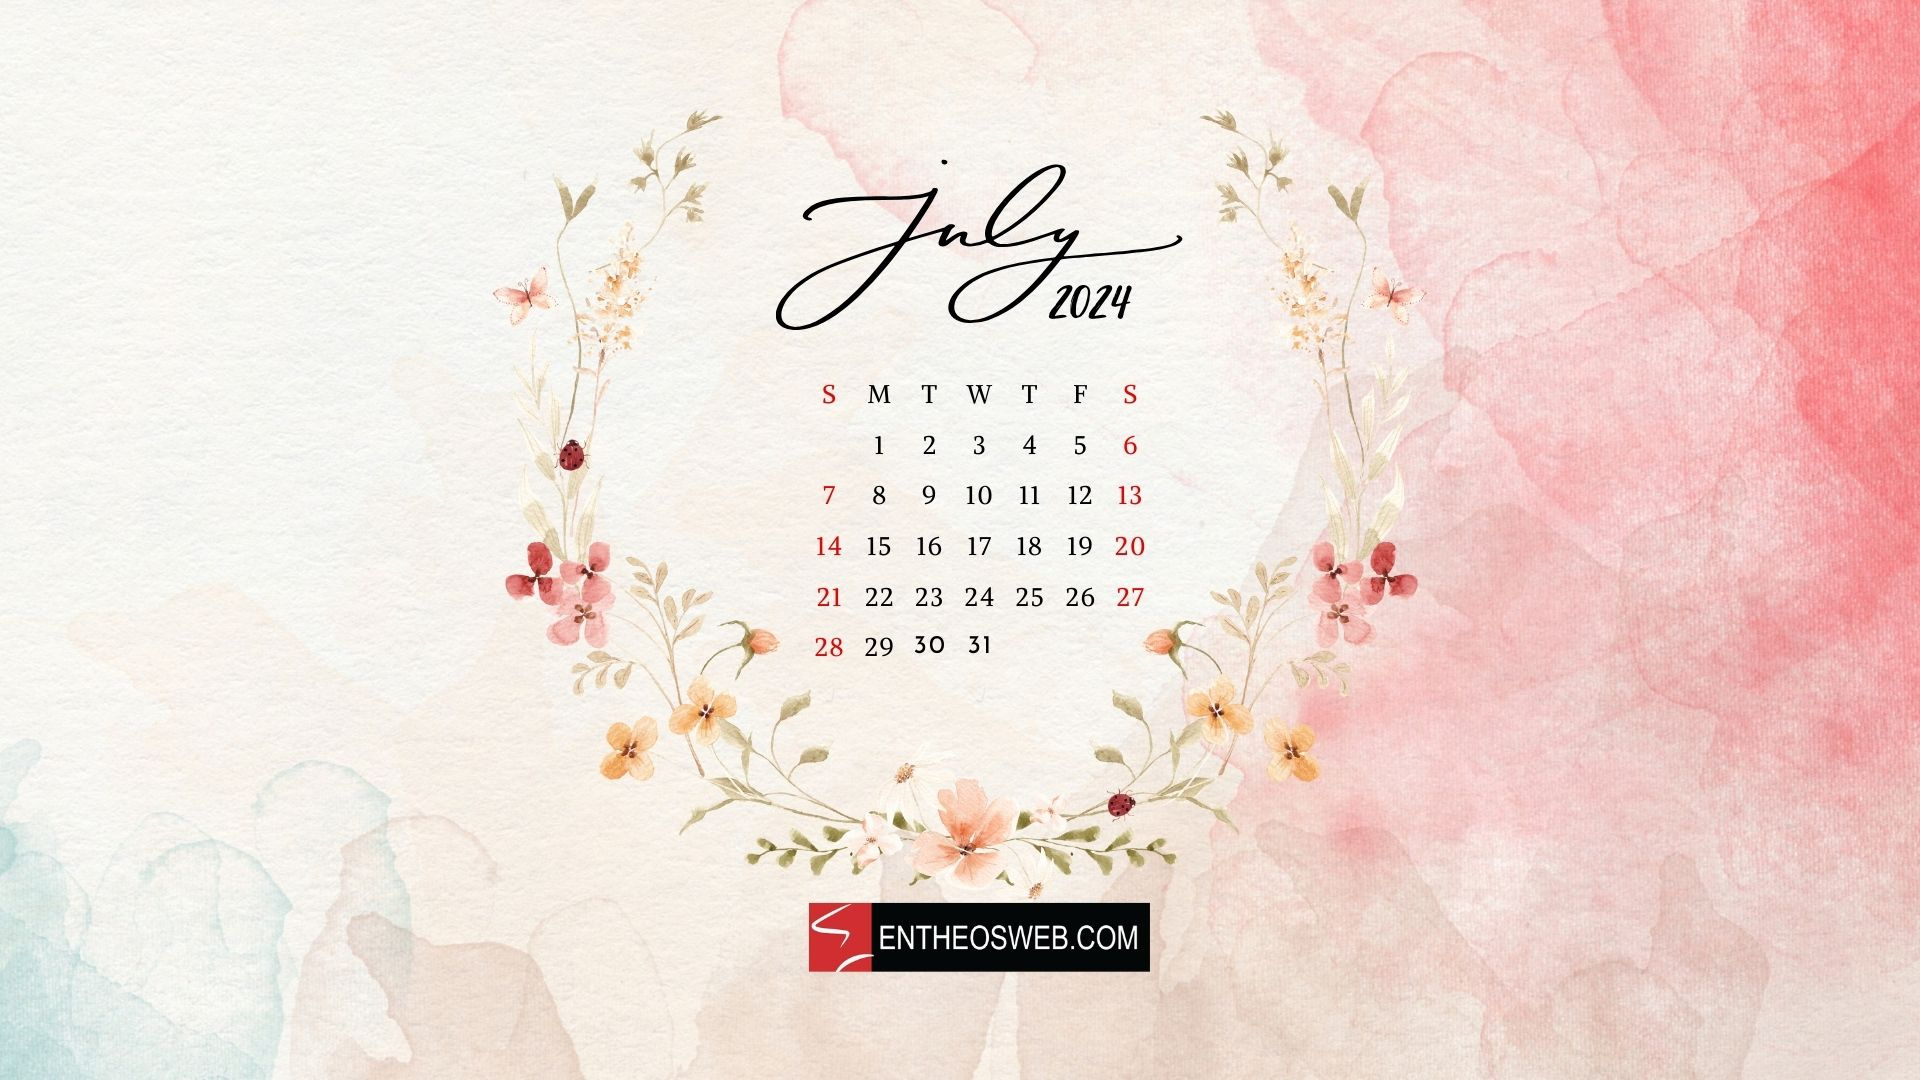 July 2024 Desktop Wallpaper Calendar | Entheosweb intended for July Calendar 2024 Wallpaper